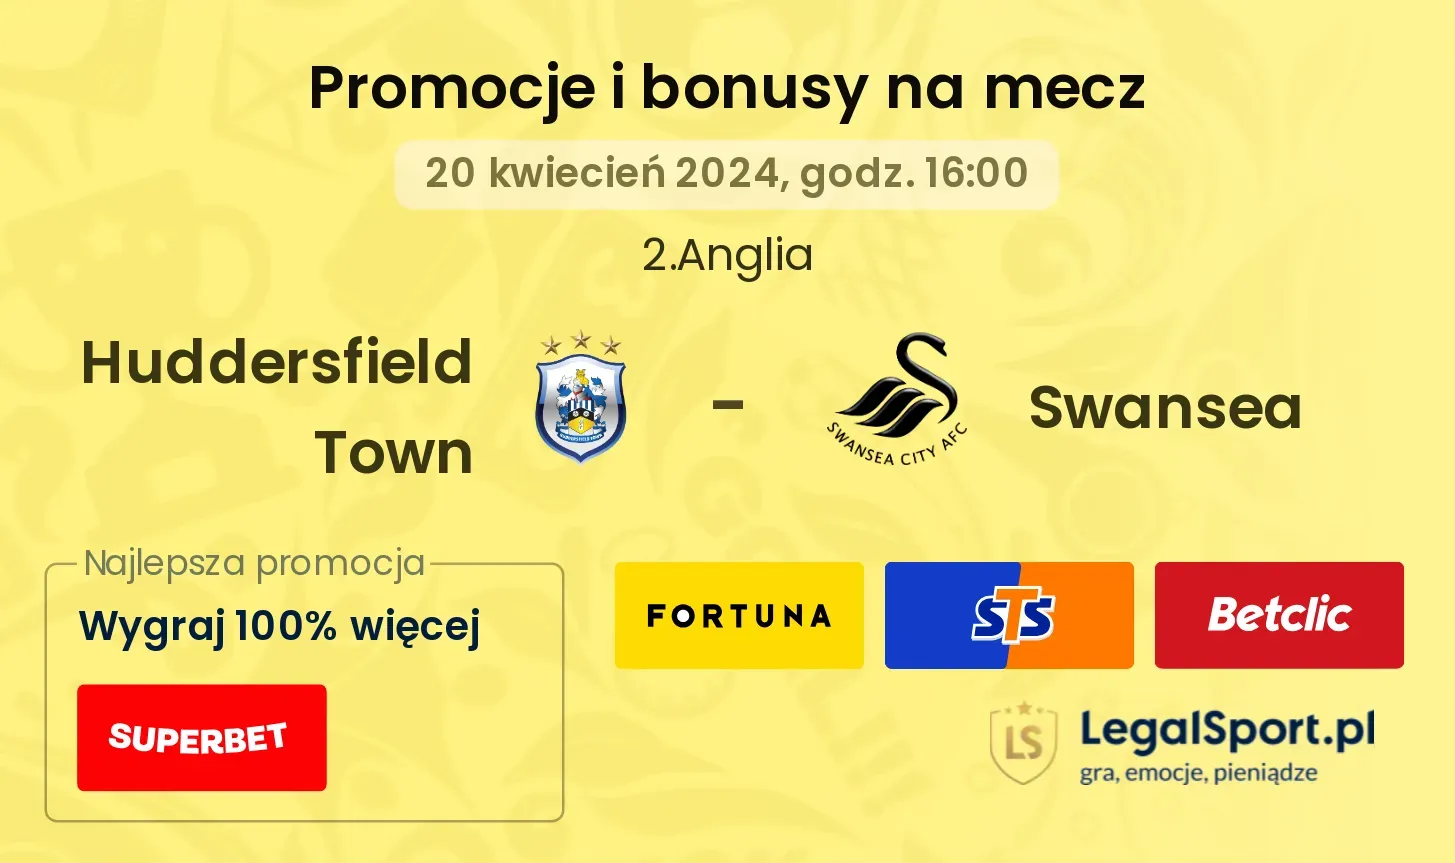 Huddersfield Town - Swansea promocje bonusy na mecz